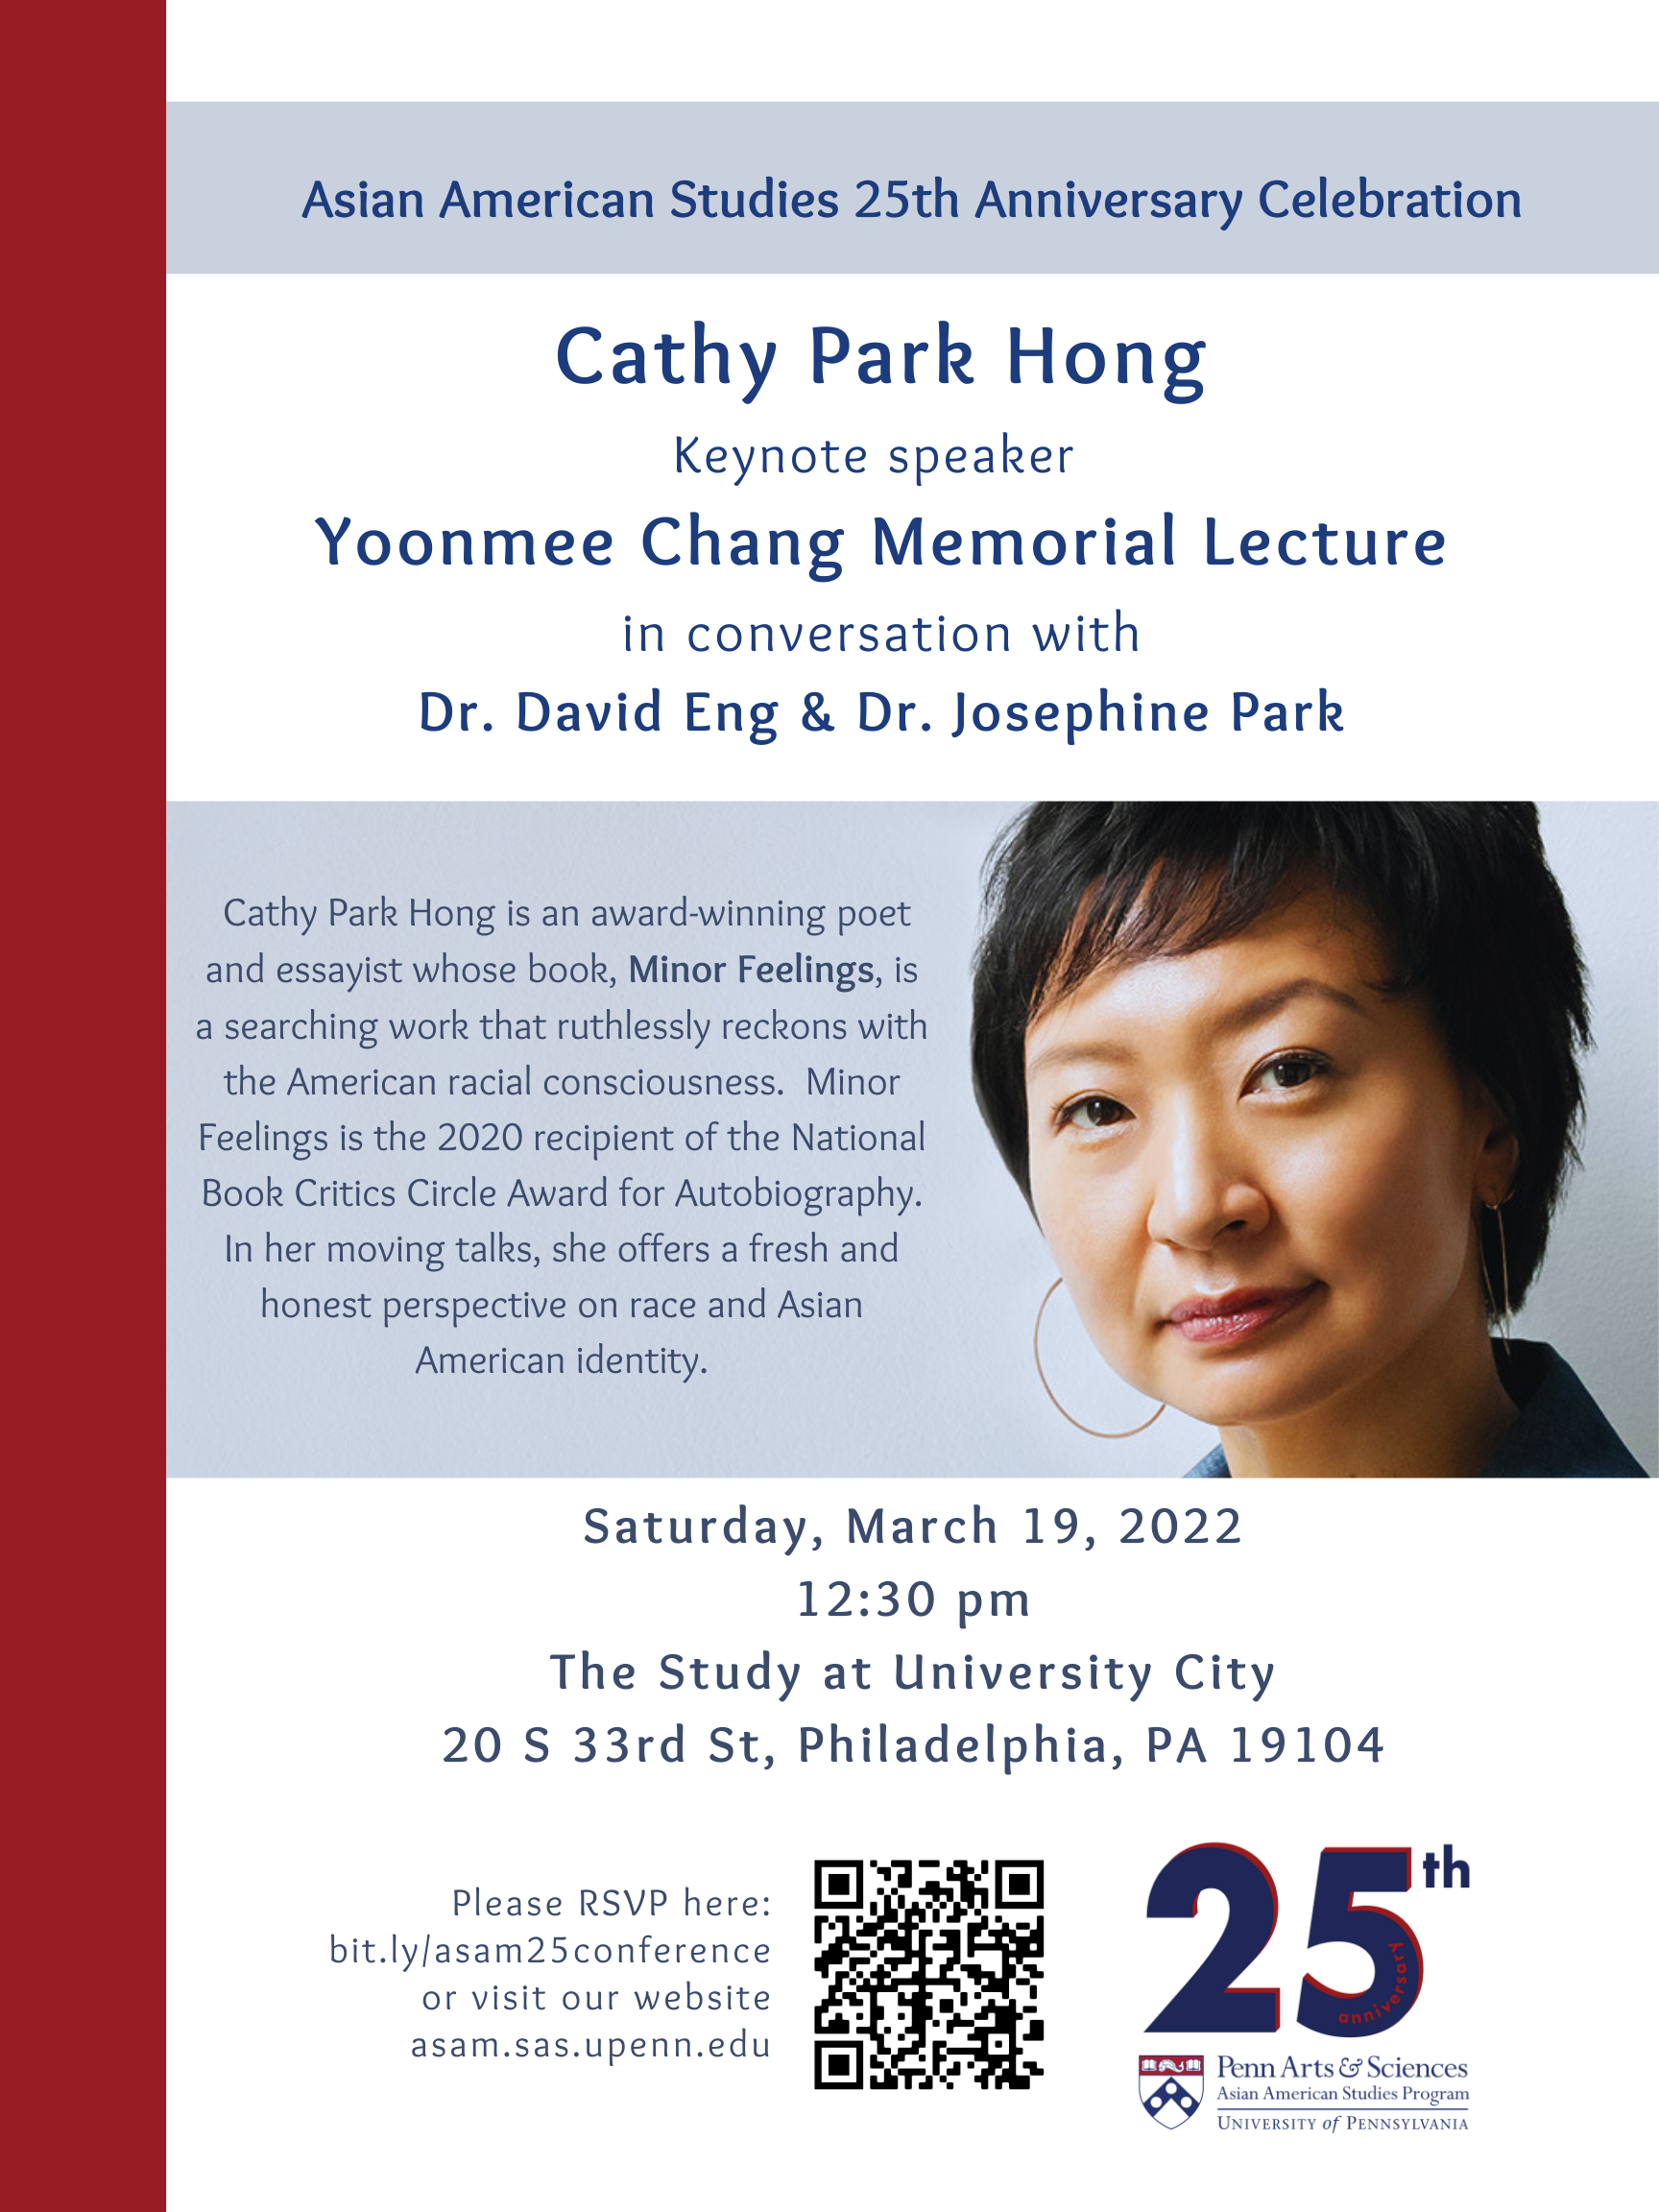 Cathy Park Hong